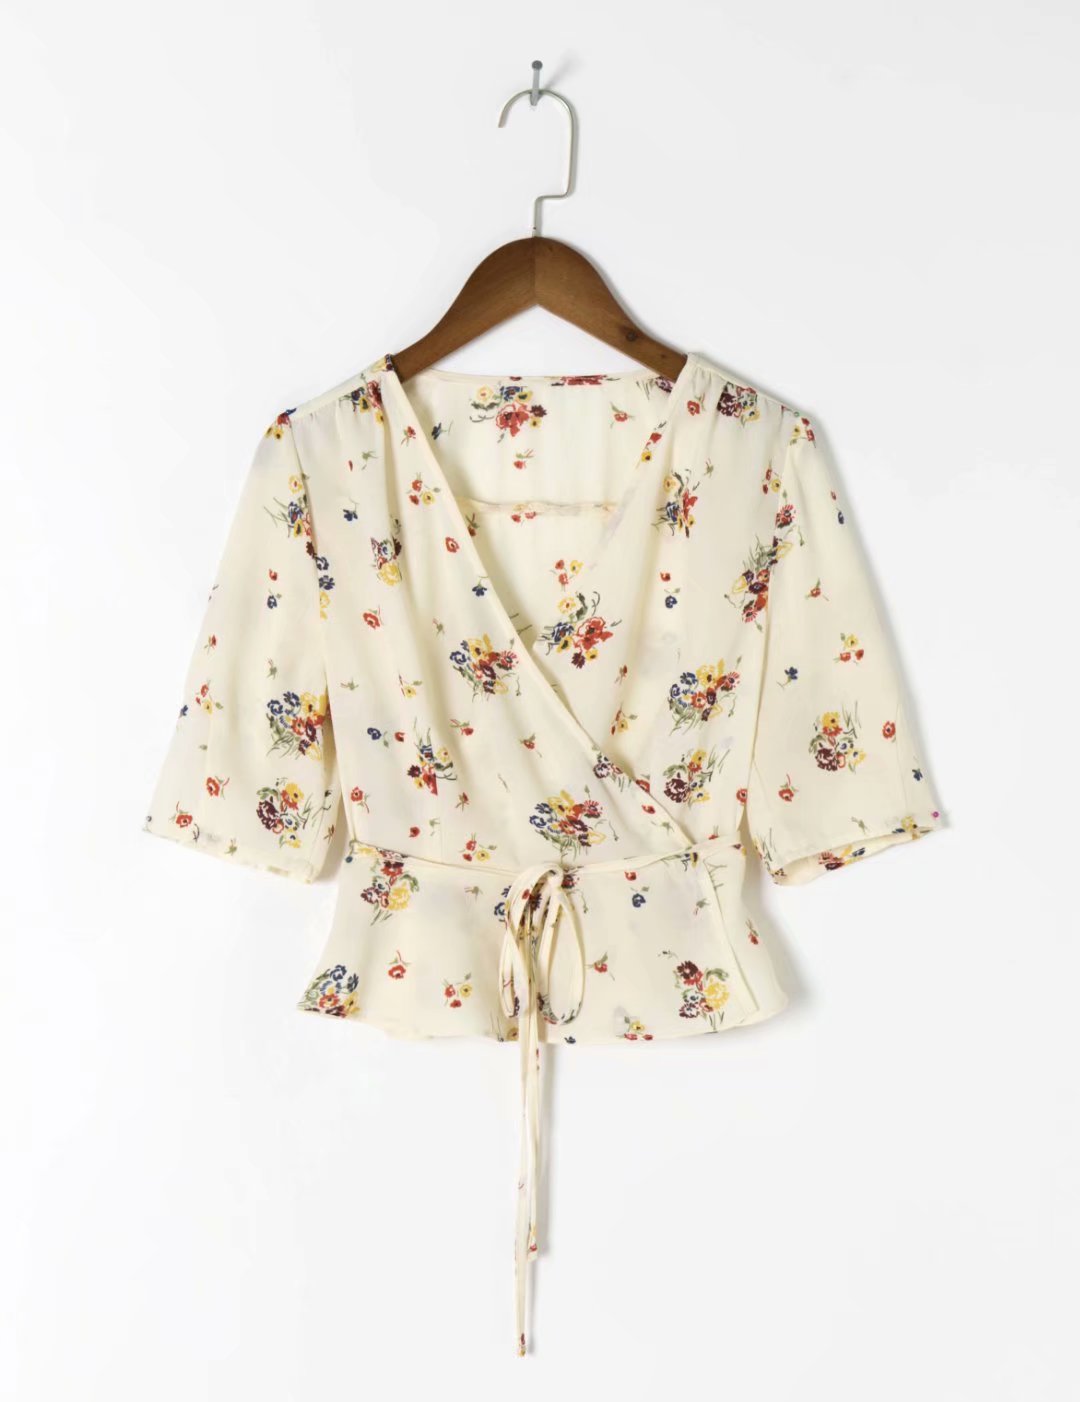 Chicdear Vintage Floral Print Women Shirt Elegant Summer Top With Sashes V Neck Short Sleeves Holiday Chiffon Shirt Femme Vestidos